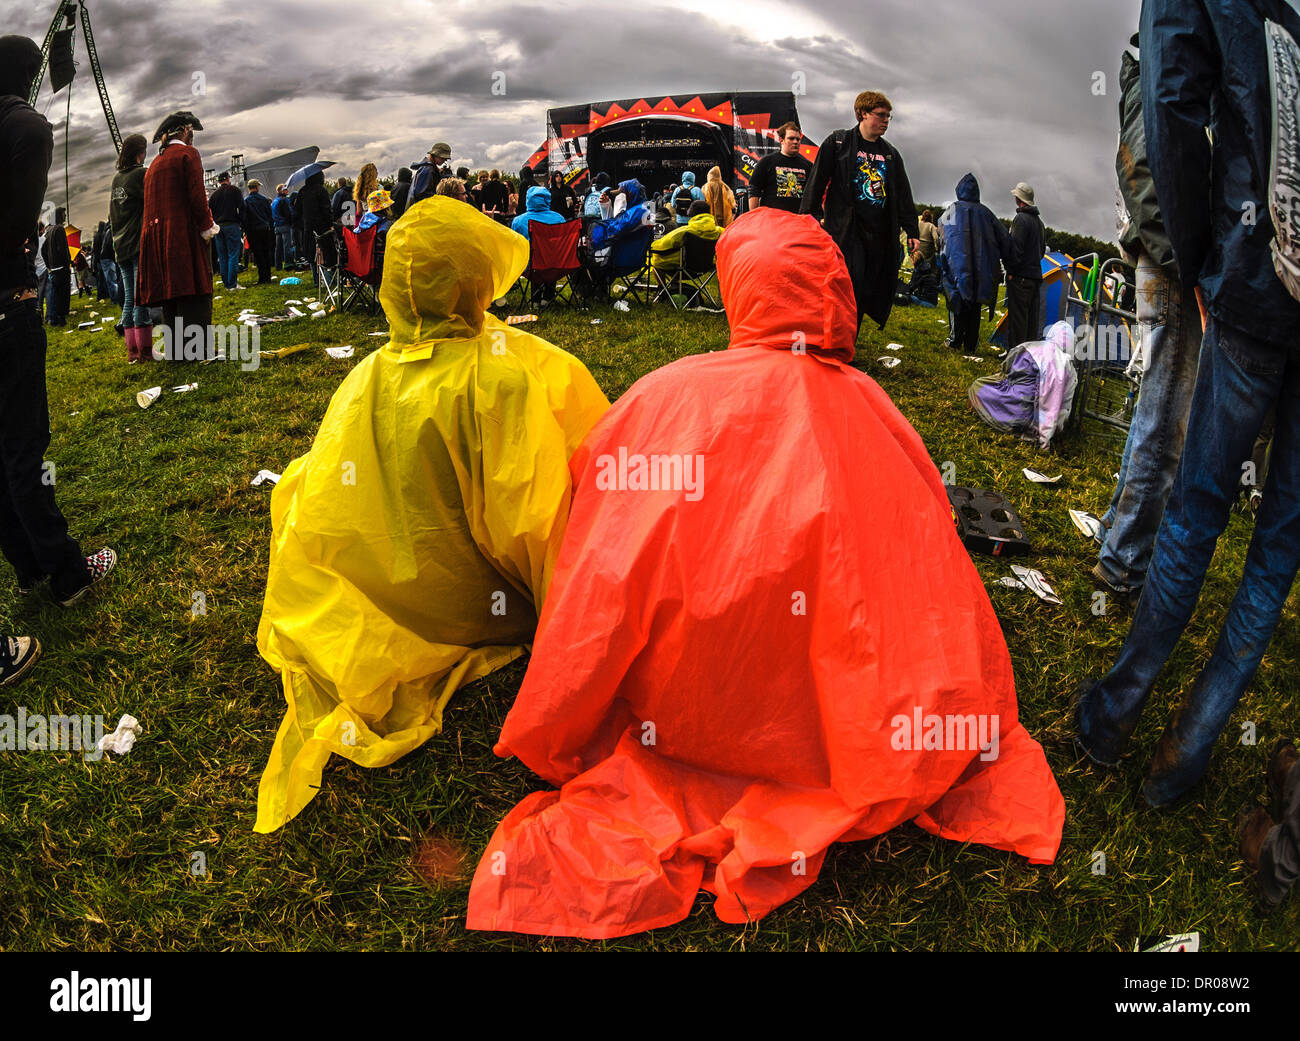 Leeds Festival - crowd. 2 people in foreground wearing waterproof ponchos. Stock Photo